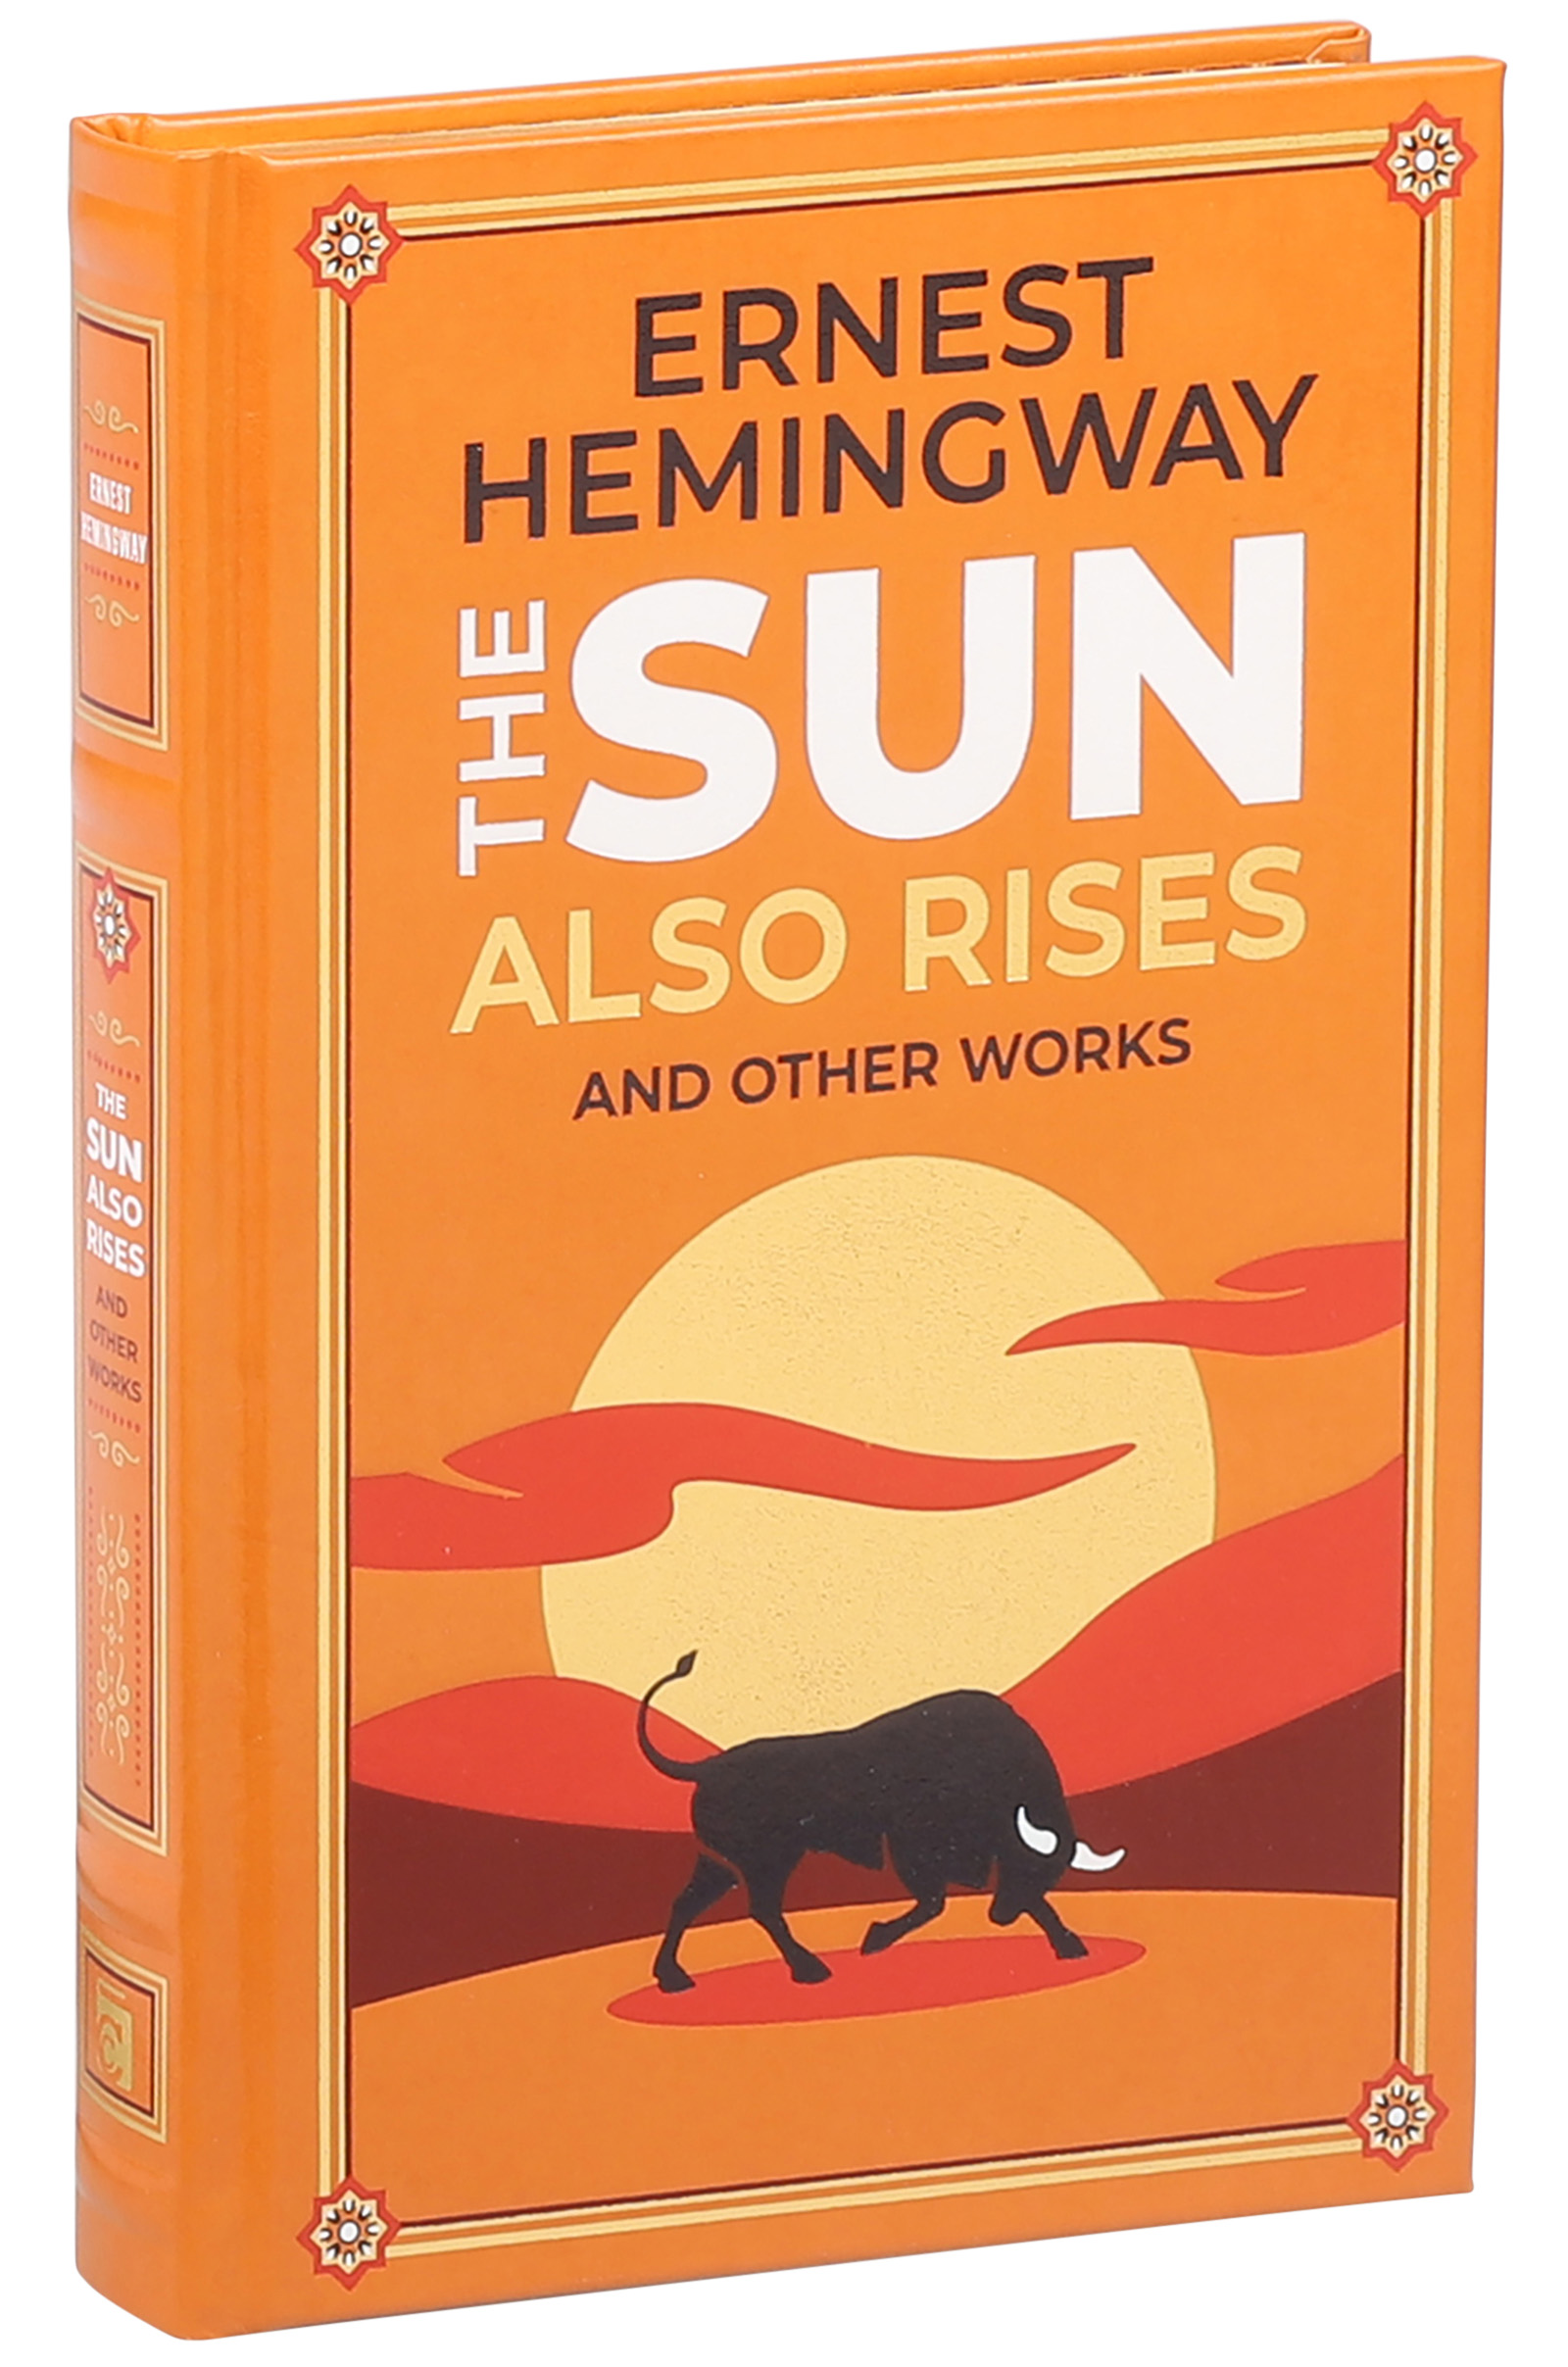 The 'Sun Rises' once again on Hemingway